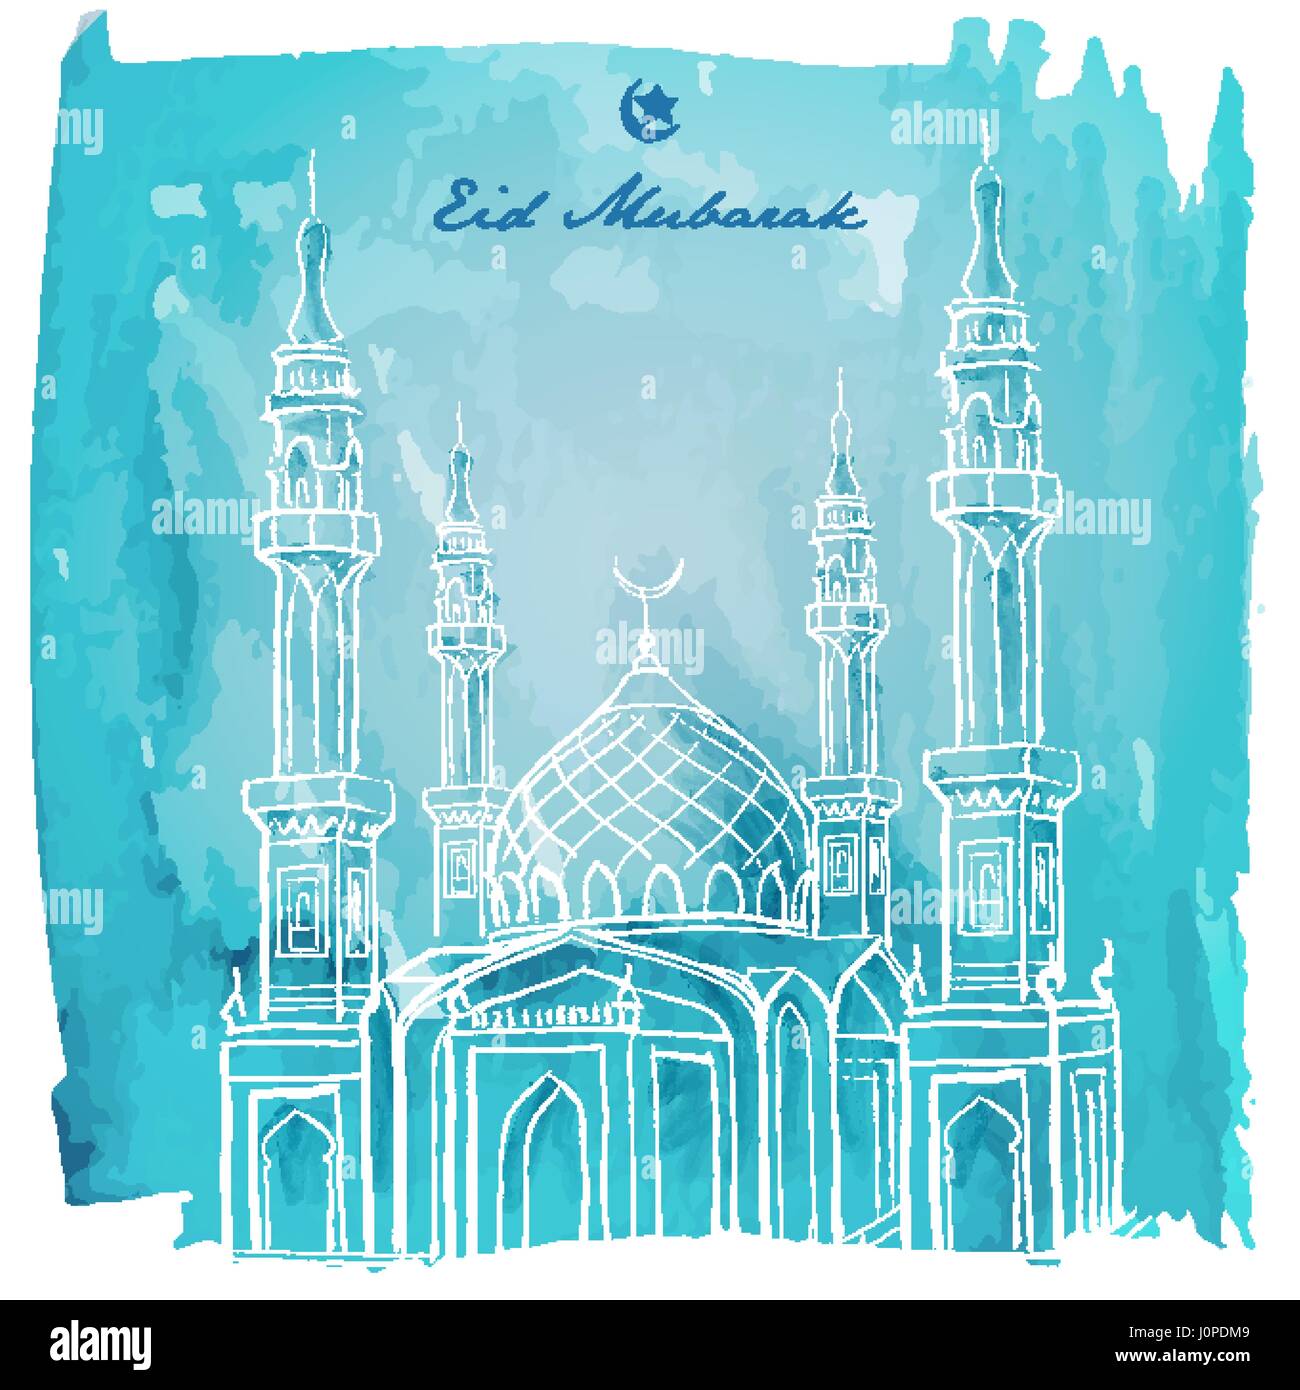 Eid Mubarak Banner greeting background Stock Vector Image & Art - Alamy